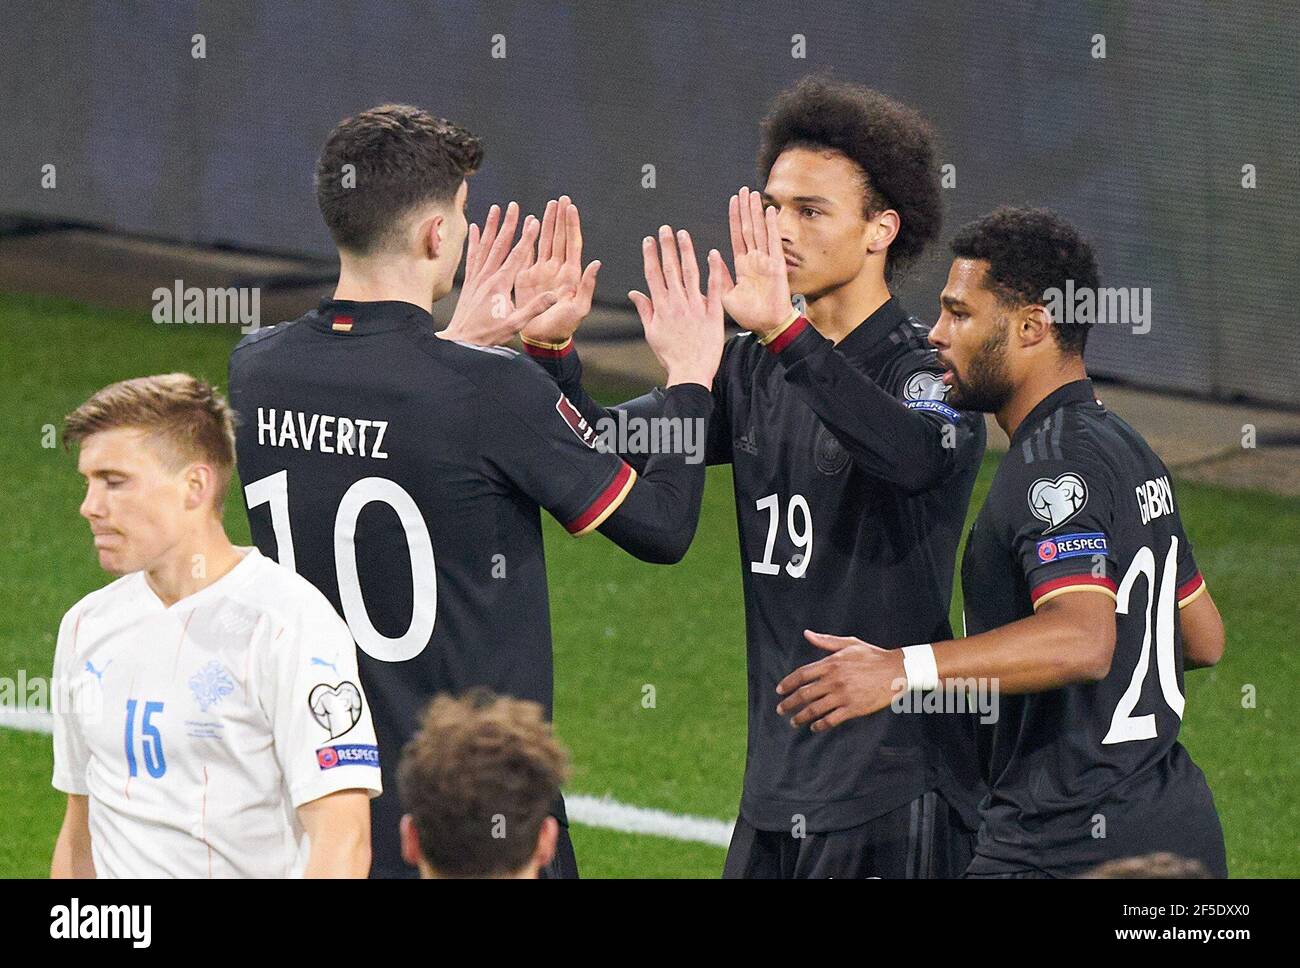 Kai HAVERTZ, DFB 10 celebrates his goal, happy, laugh, celebration, 2-0, Leroy SANE, DFB 19 Serge GNABRY, DFB 20 in the match GERMANY - ICELAND Deutschland